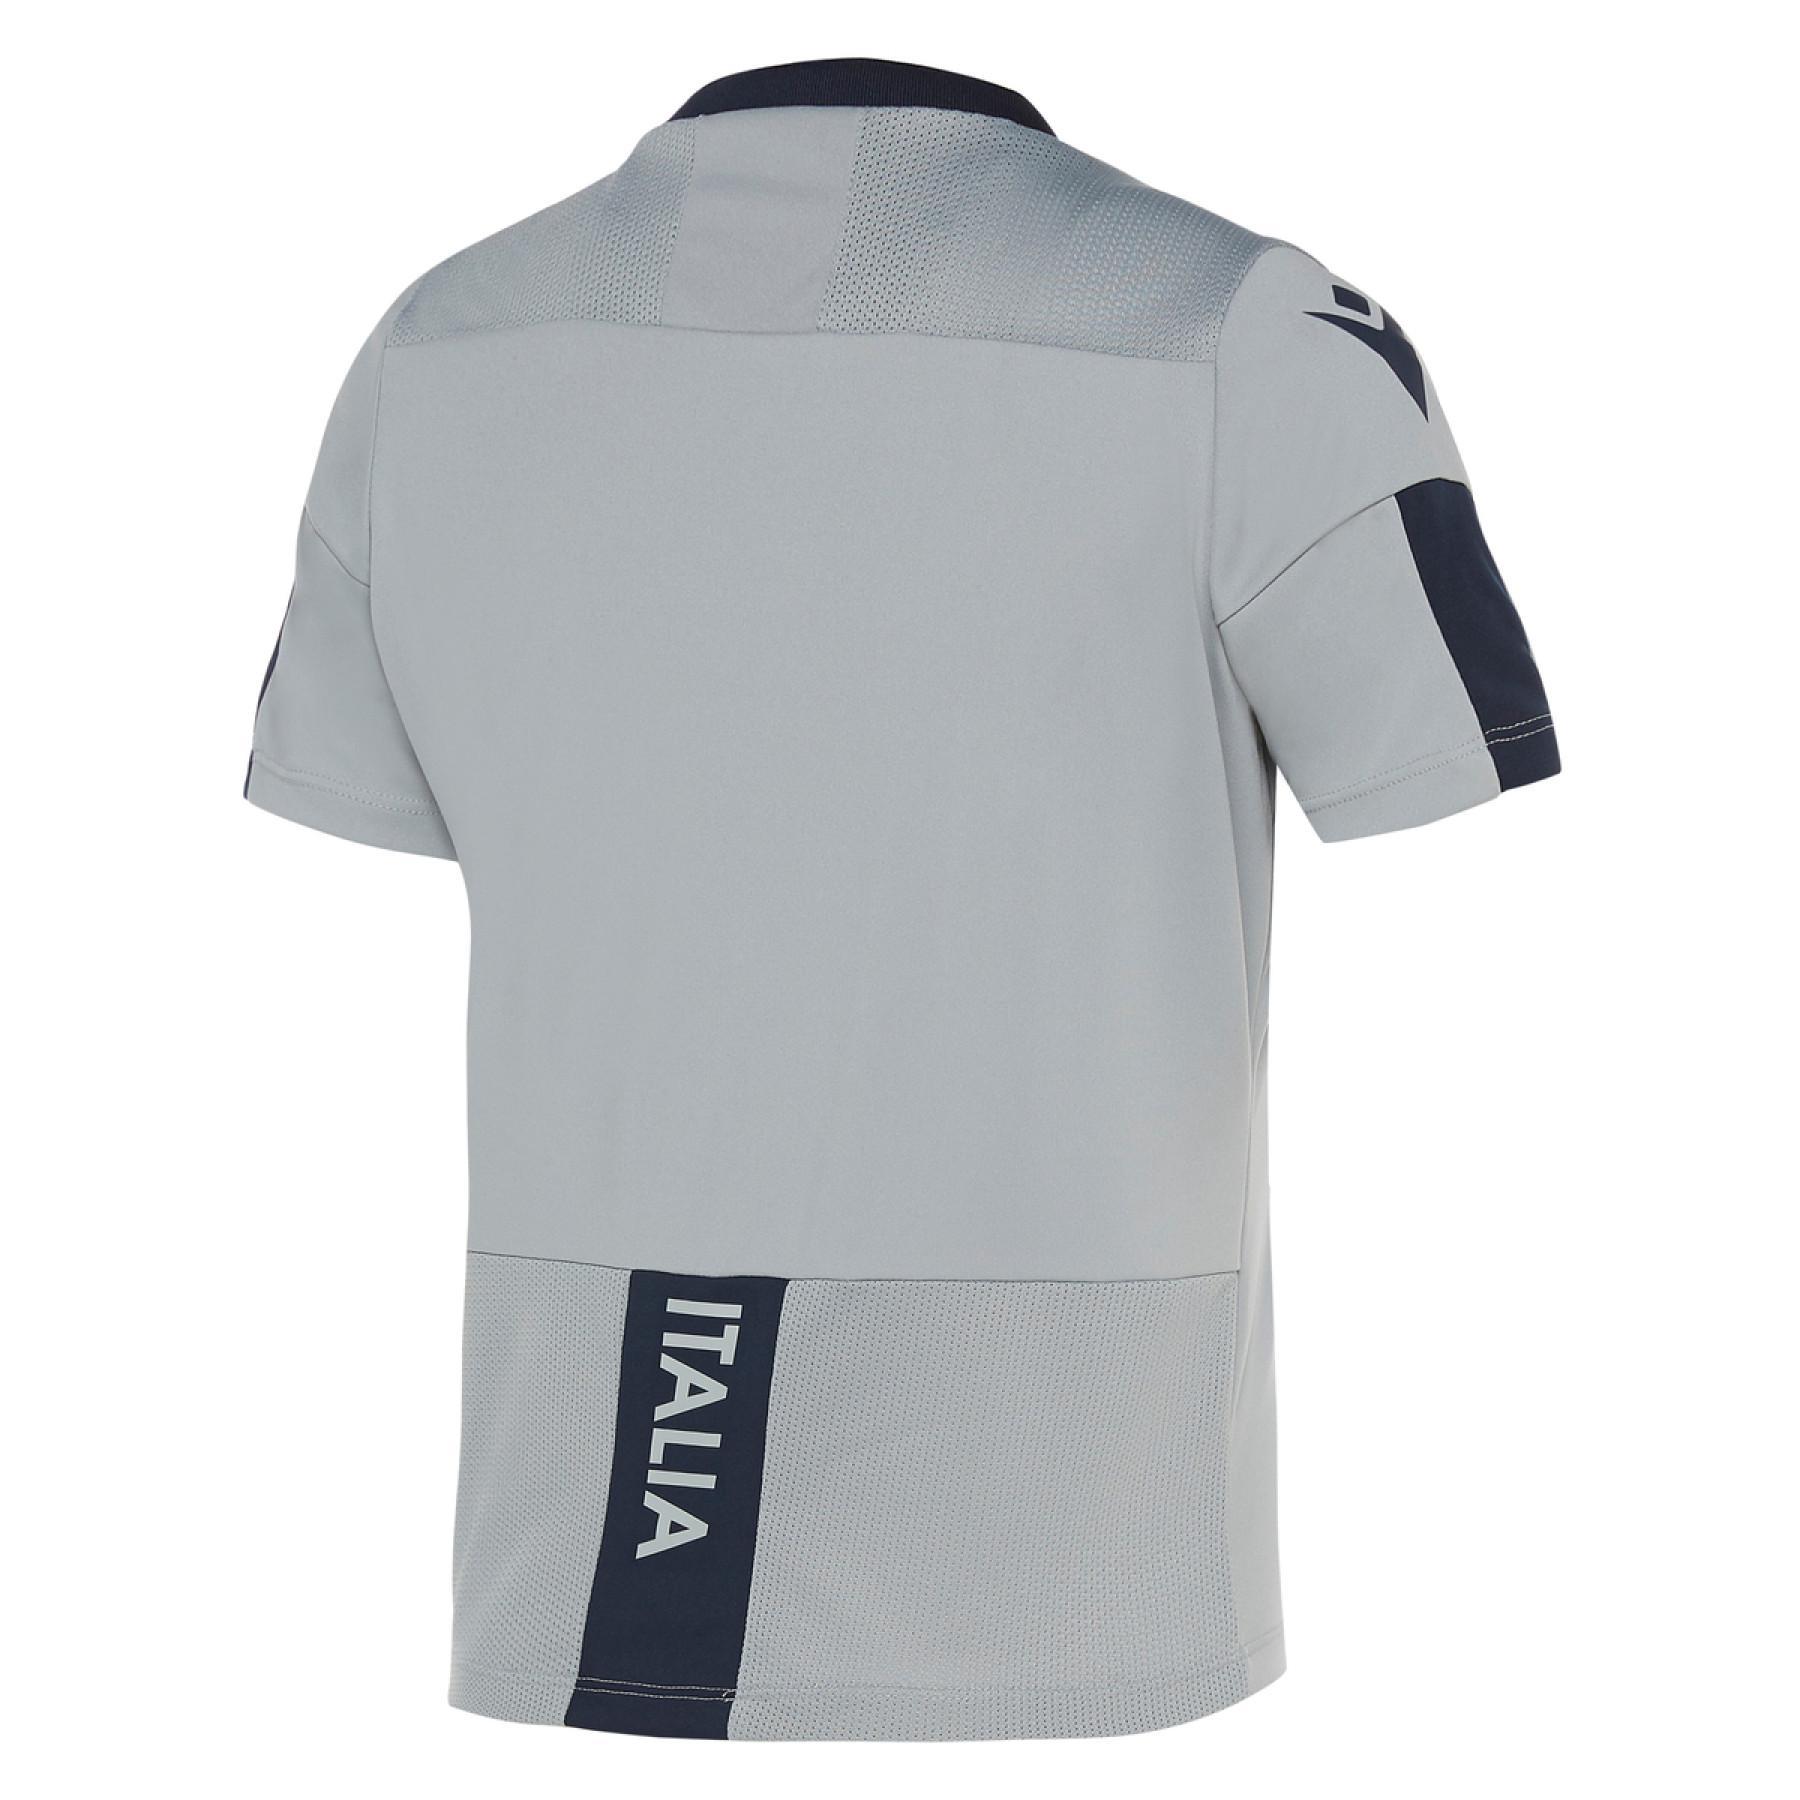 T-shirt speler Italie rugby 2019